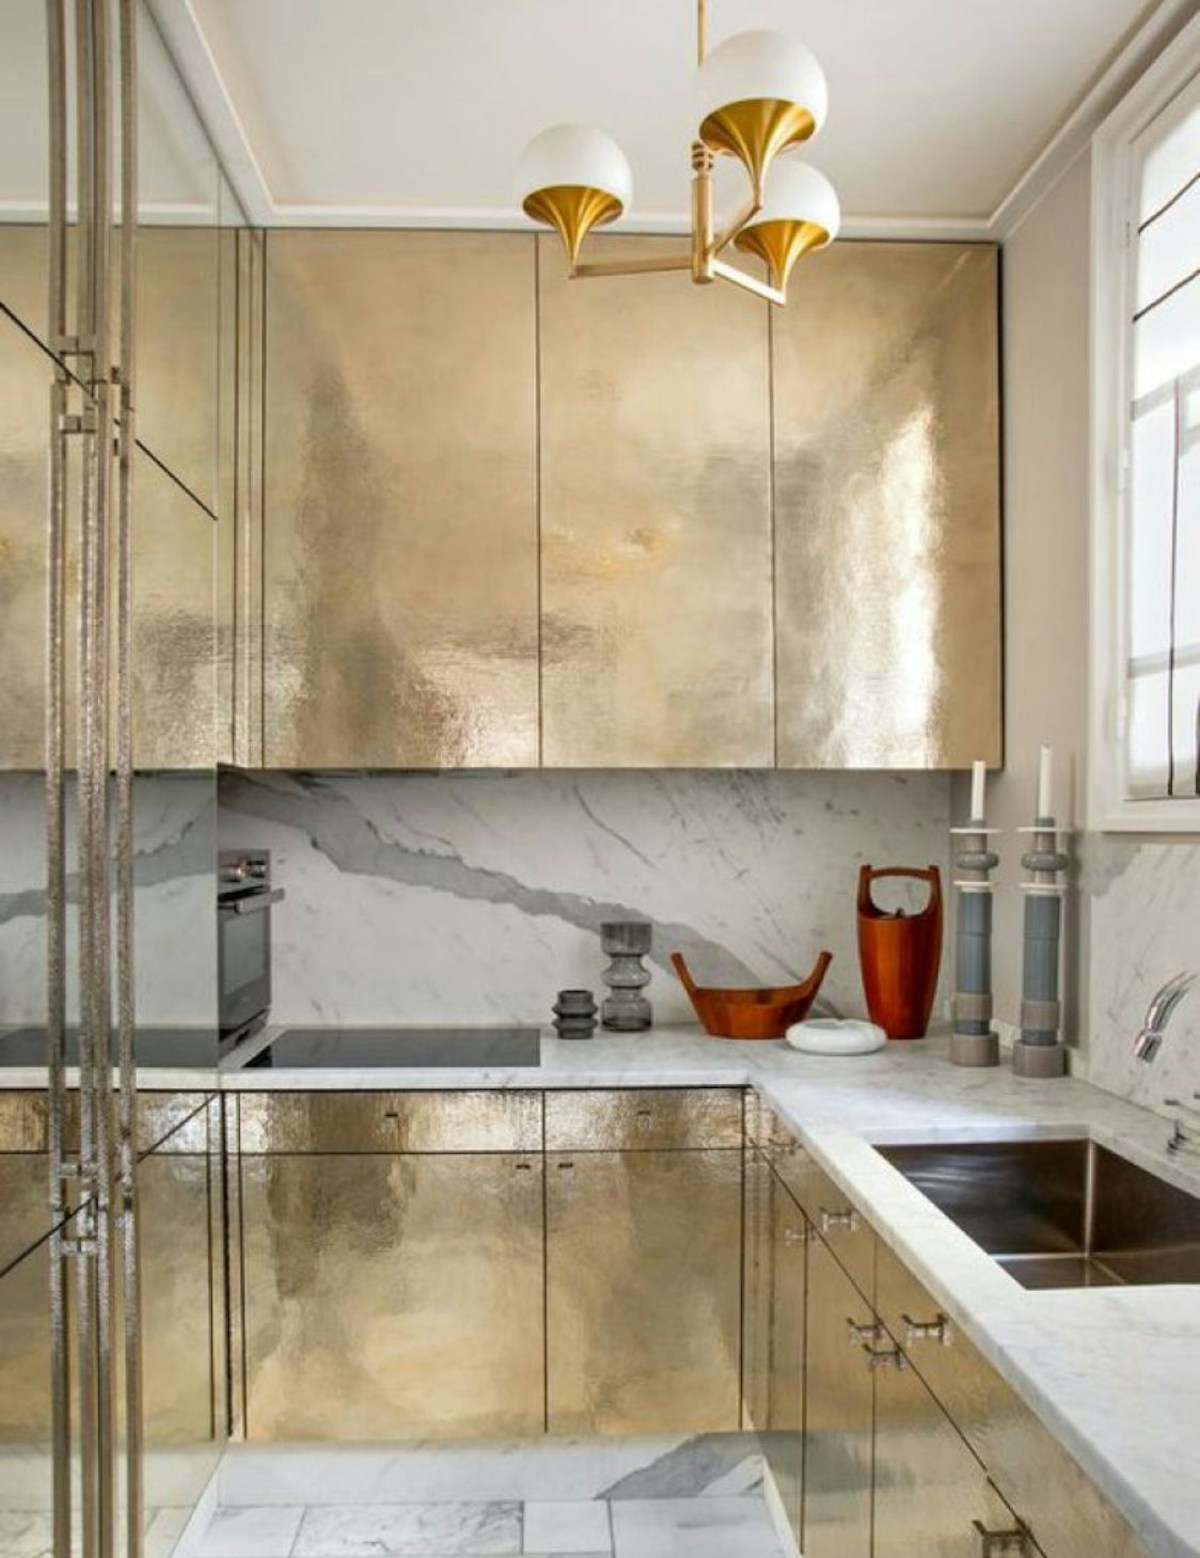 Amazing Kitchen Design Ideas – Jean-Louis Deniot - LuxDeco.com Style Guide